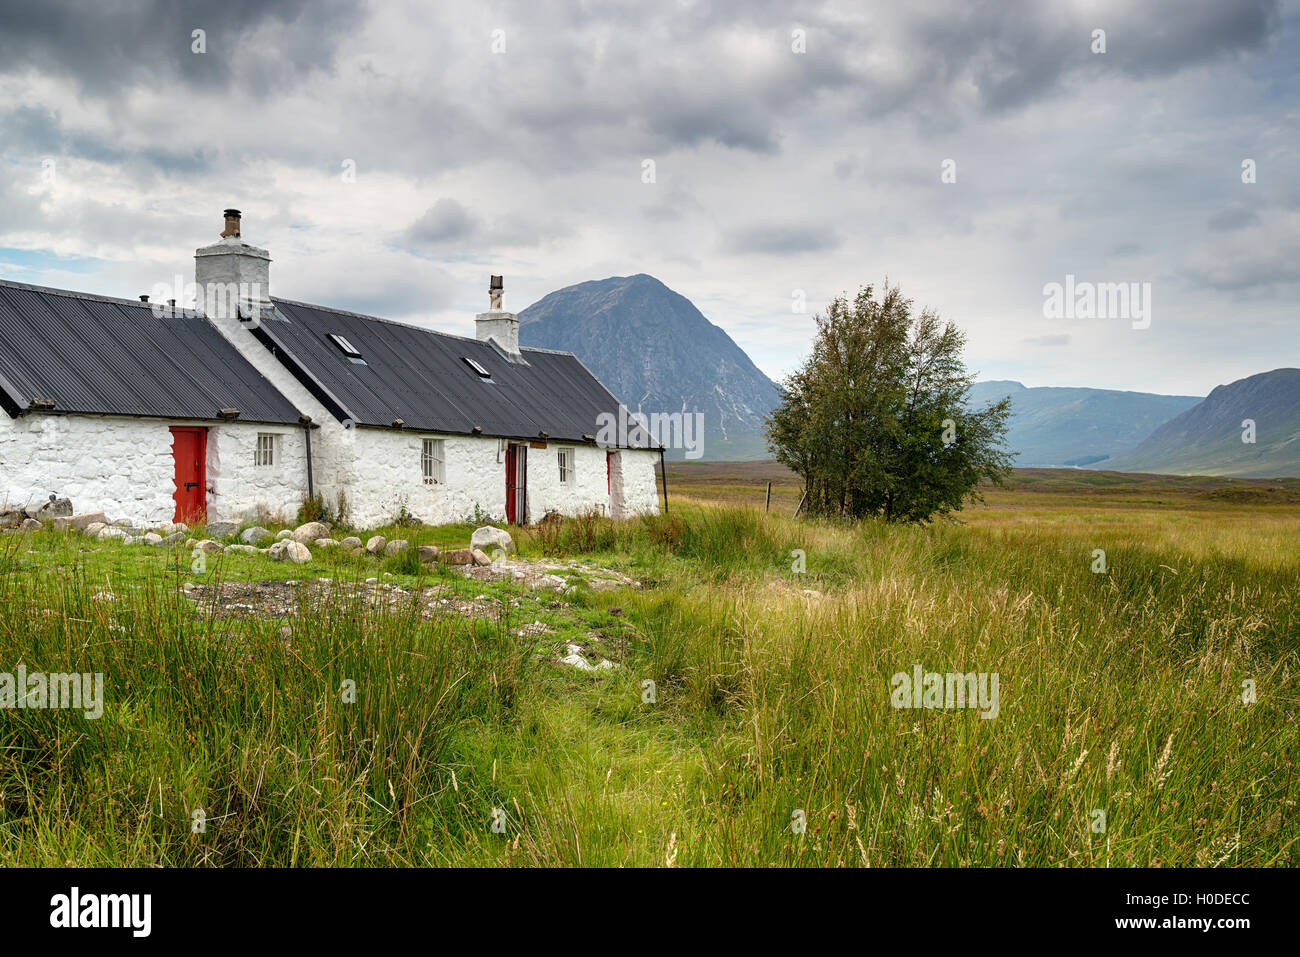 Blackrock Cottage at Glencoe in the Scottish Highlands Stock Photo